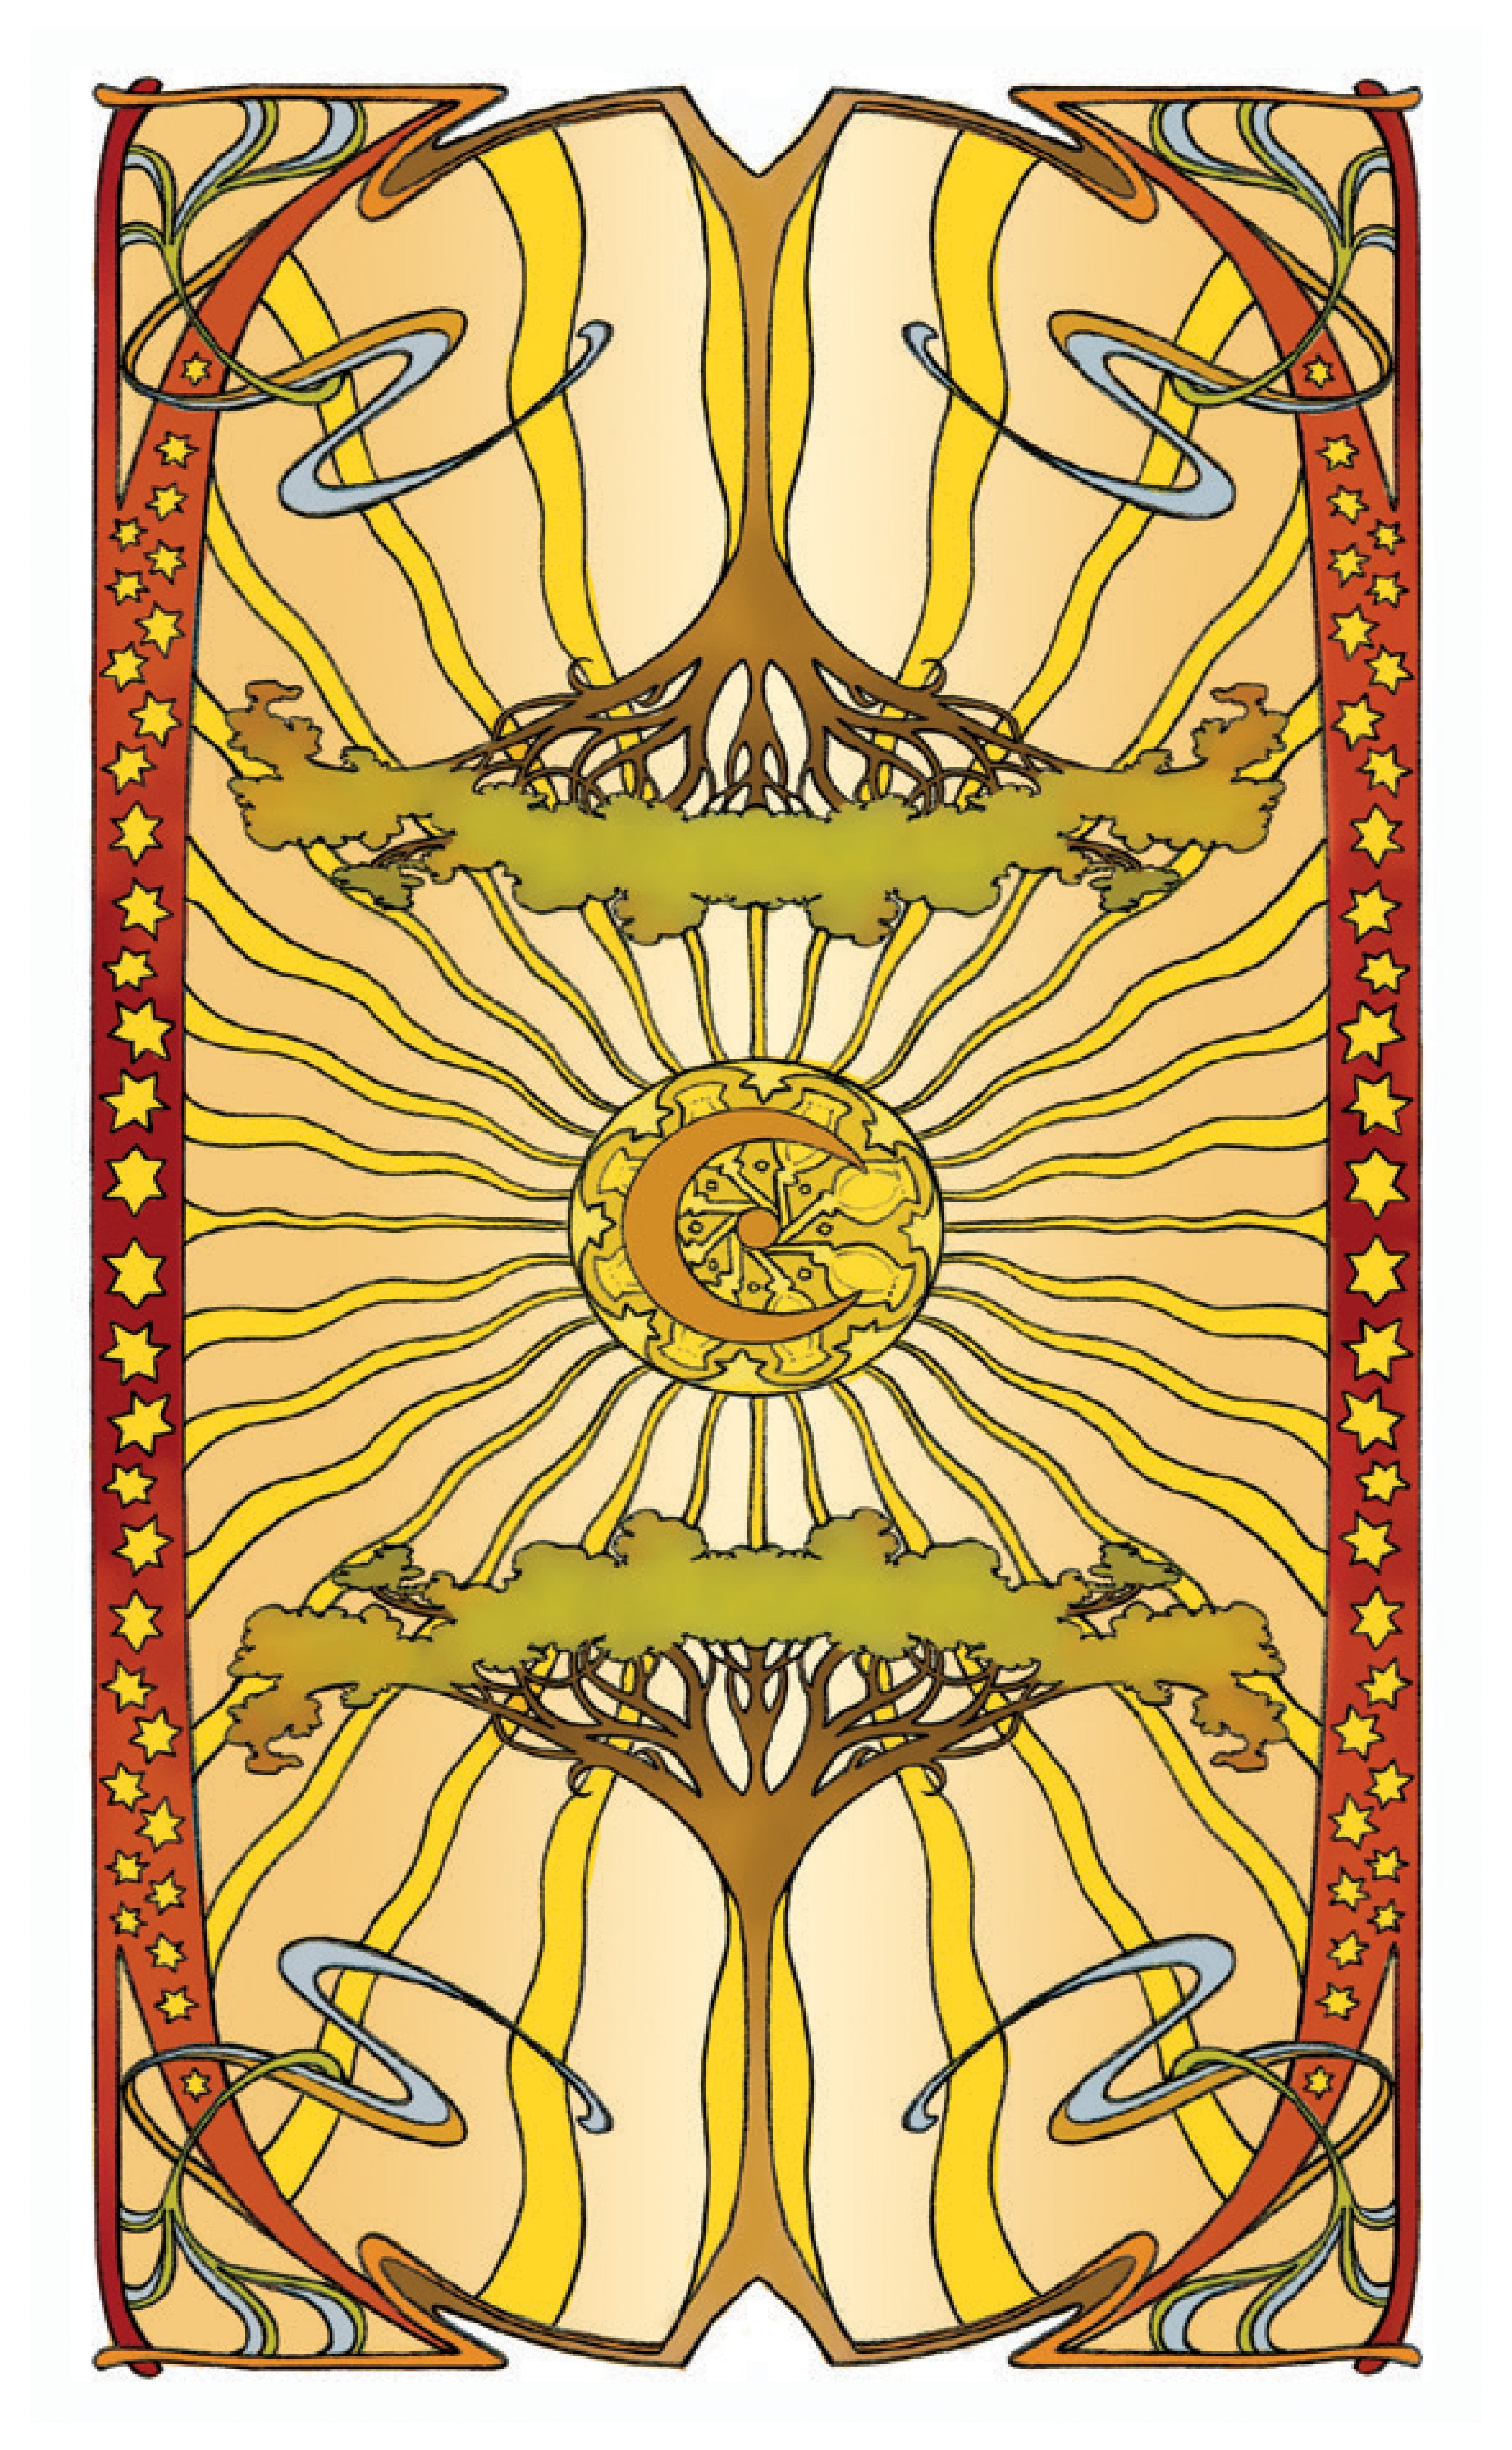 Mini Golden Art Nouveau Tarot